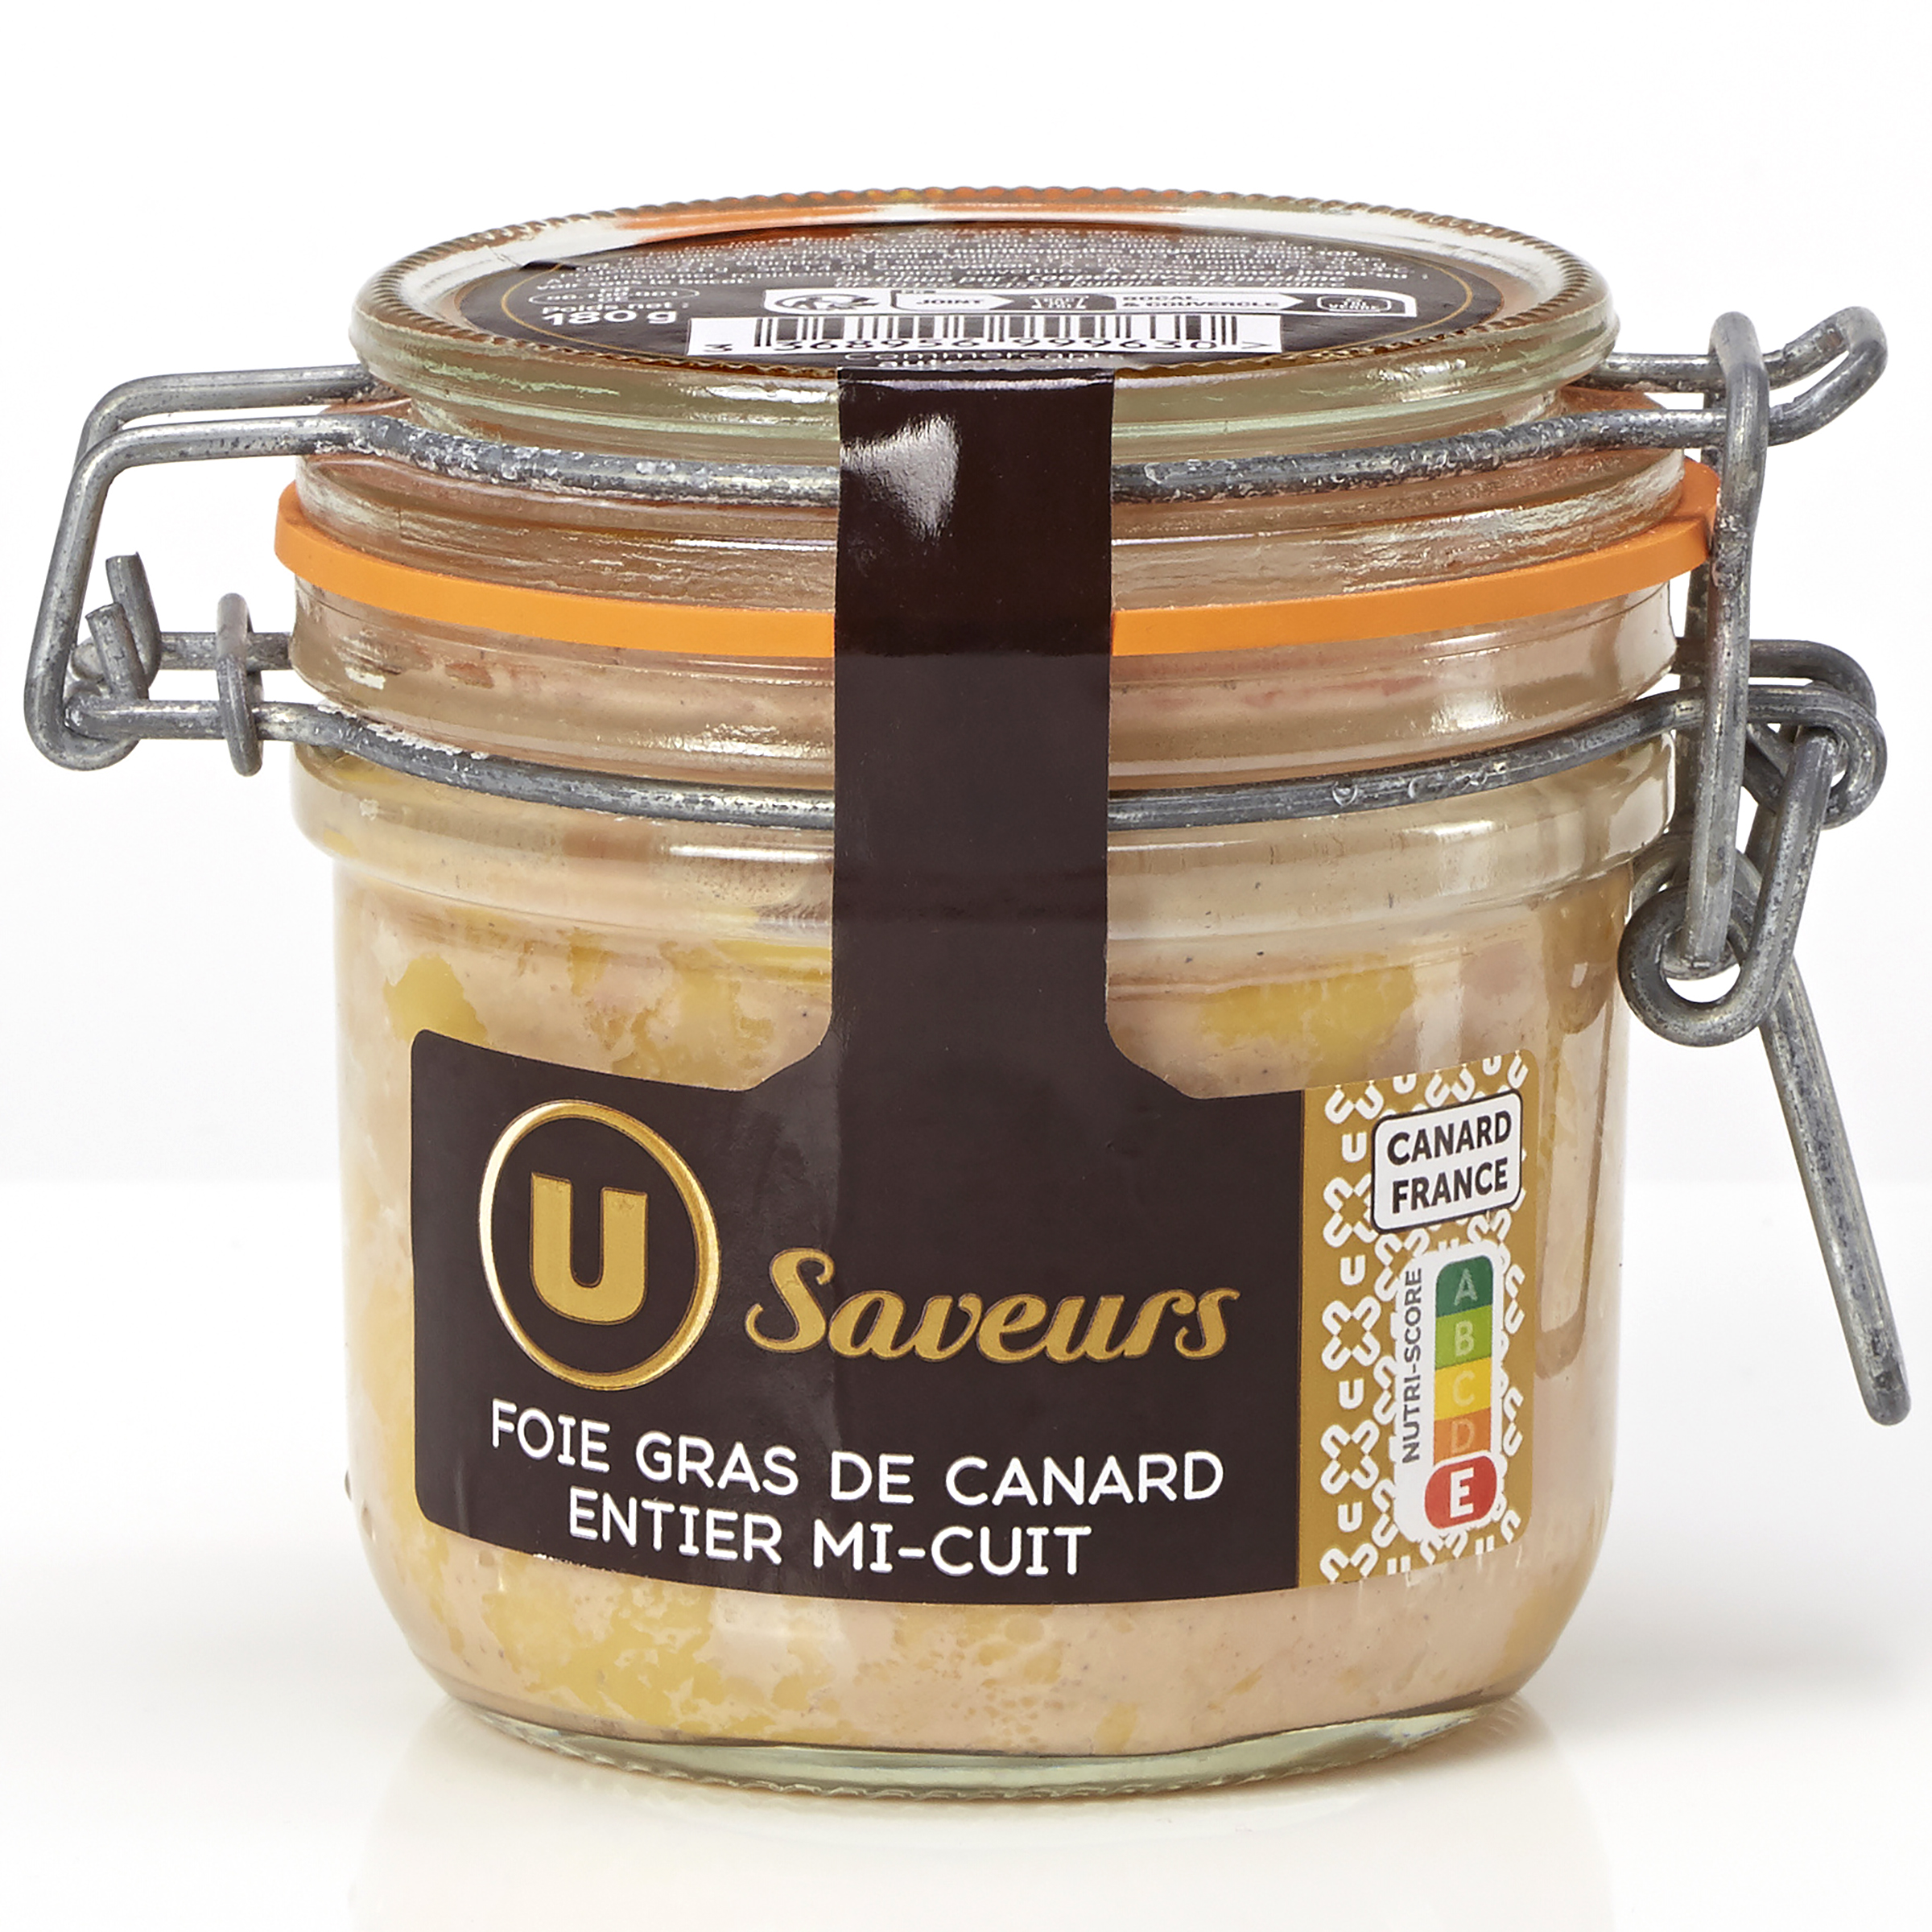 https://imtc.qccdn.fr/test/foie-gras/zoom/u-saveurs-foie-gras-de-canard-entier-mi-cuit_001.jpg